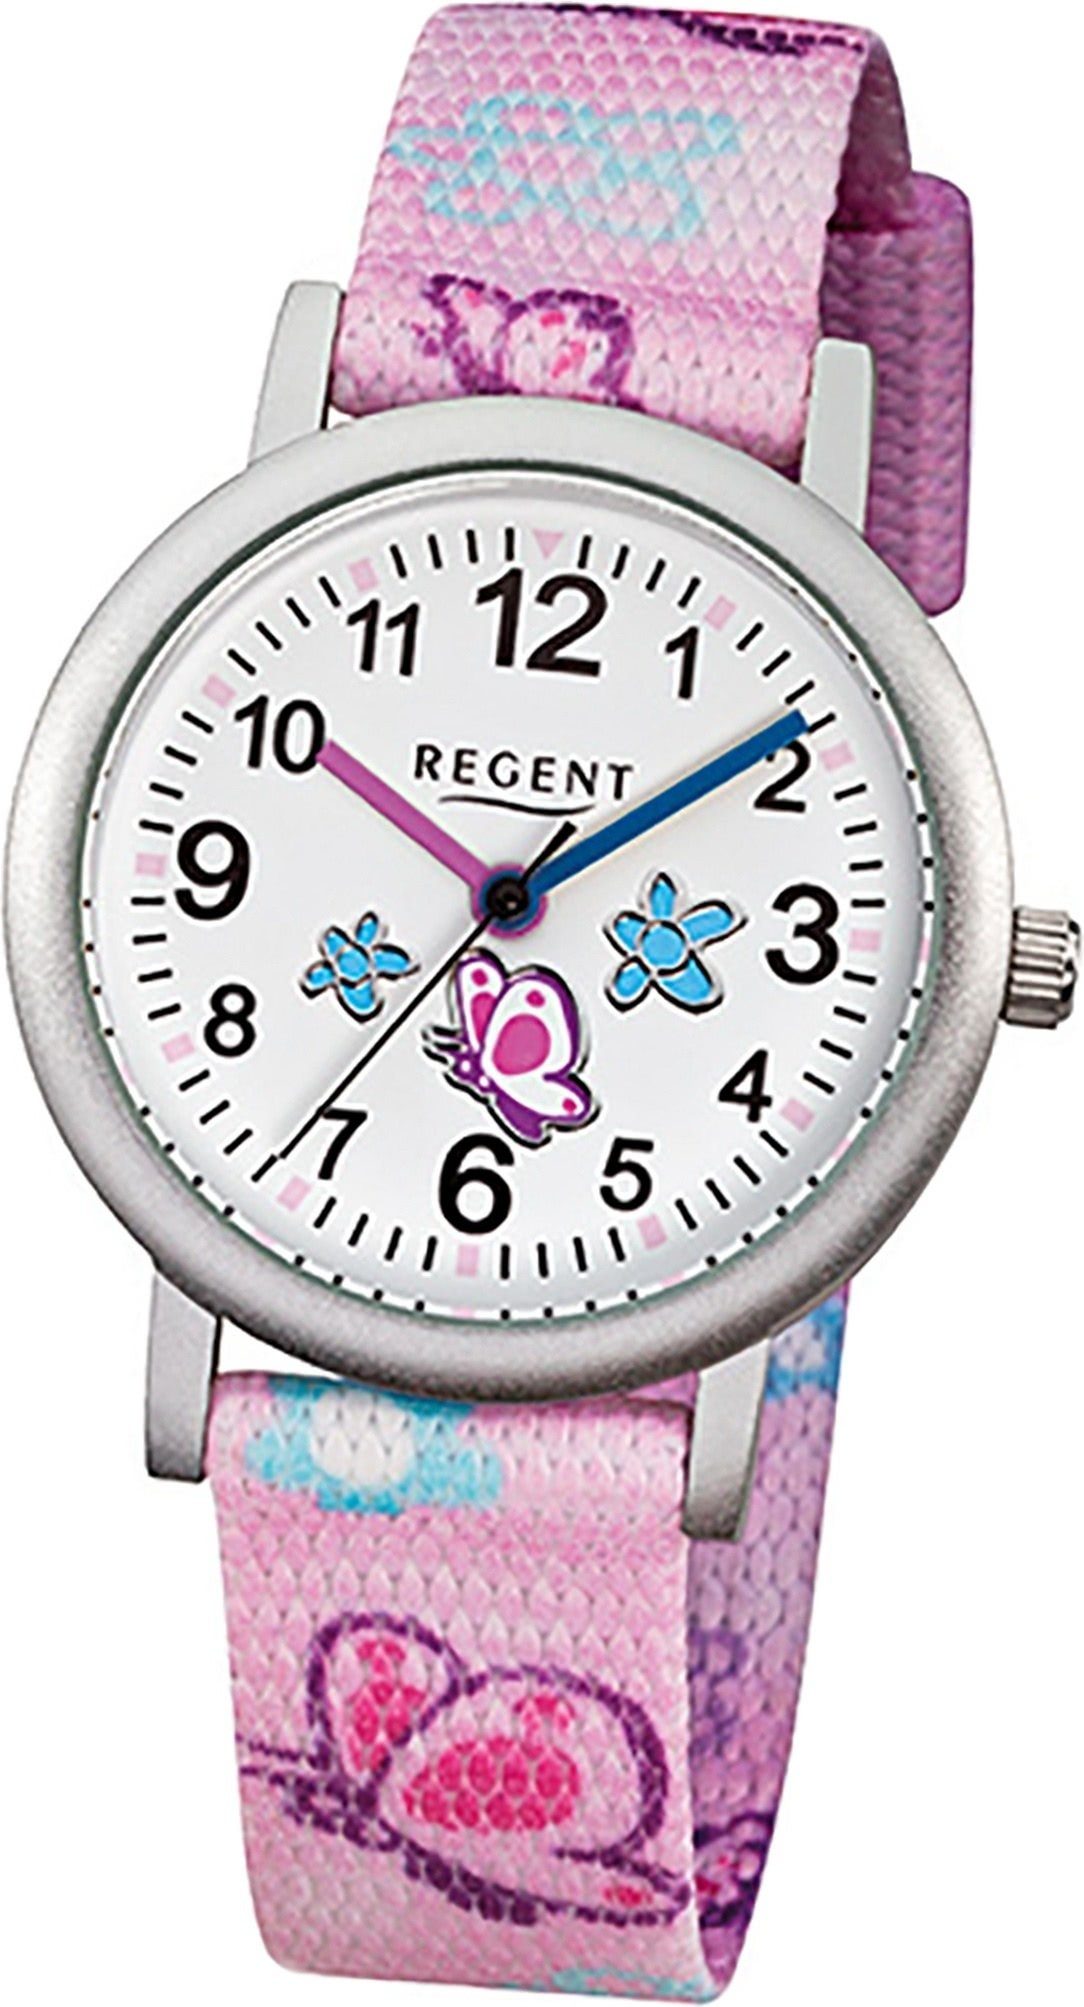 Uhr Regent Quarzuhr Regent Gehäuse, Textil rosa, Kinder F-491 30mm) klein Textilarmband (ca. Kinderuhr rundes Quarzuhr,